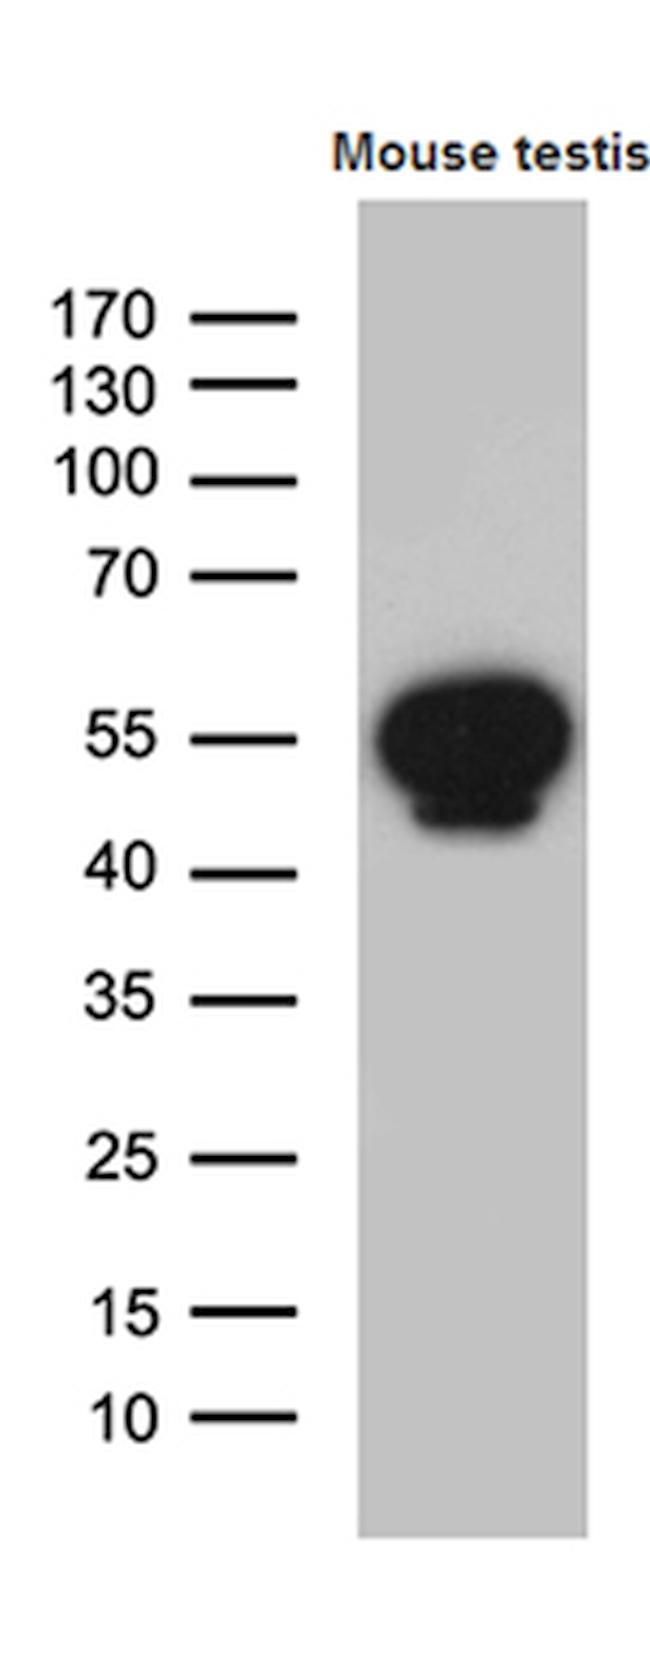 YBX2 Antibody in Western Blot (WB)